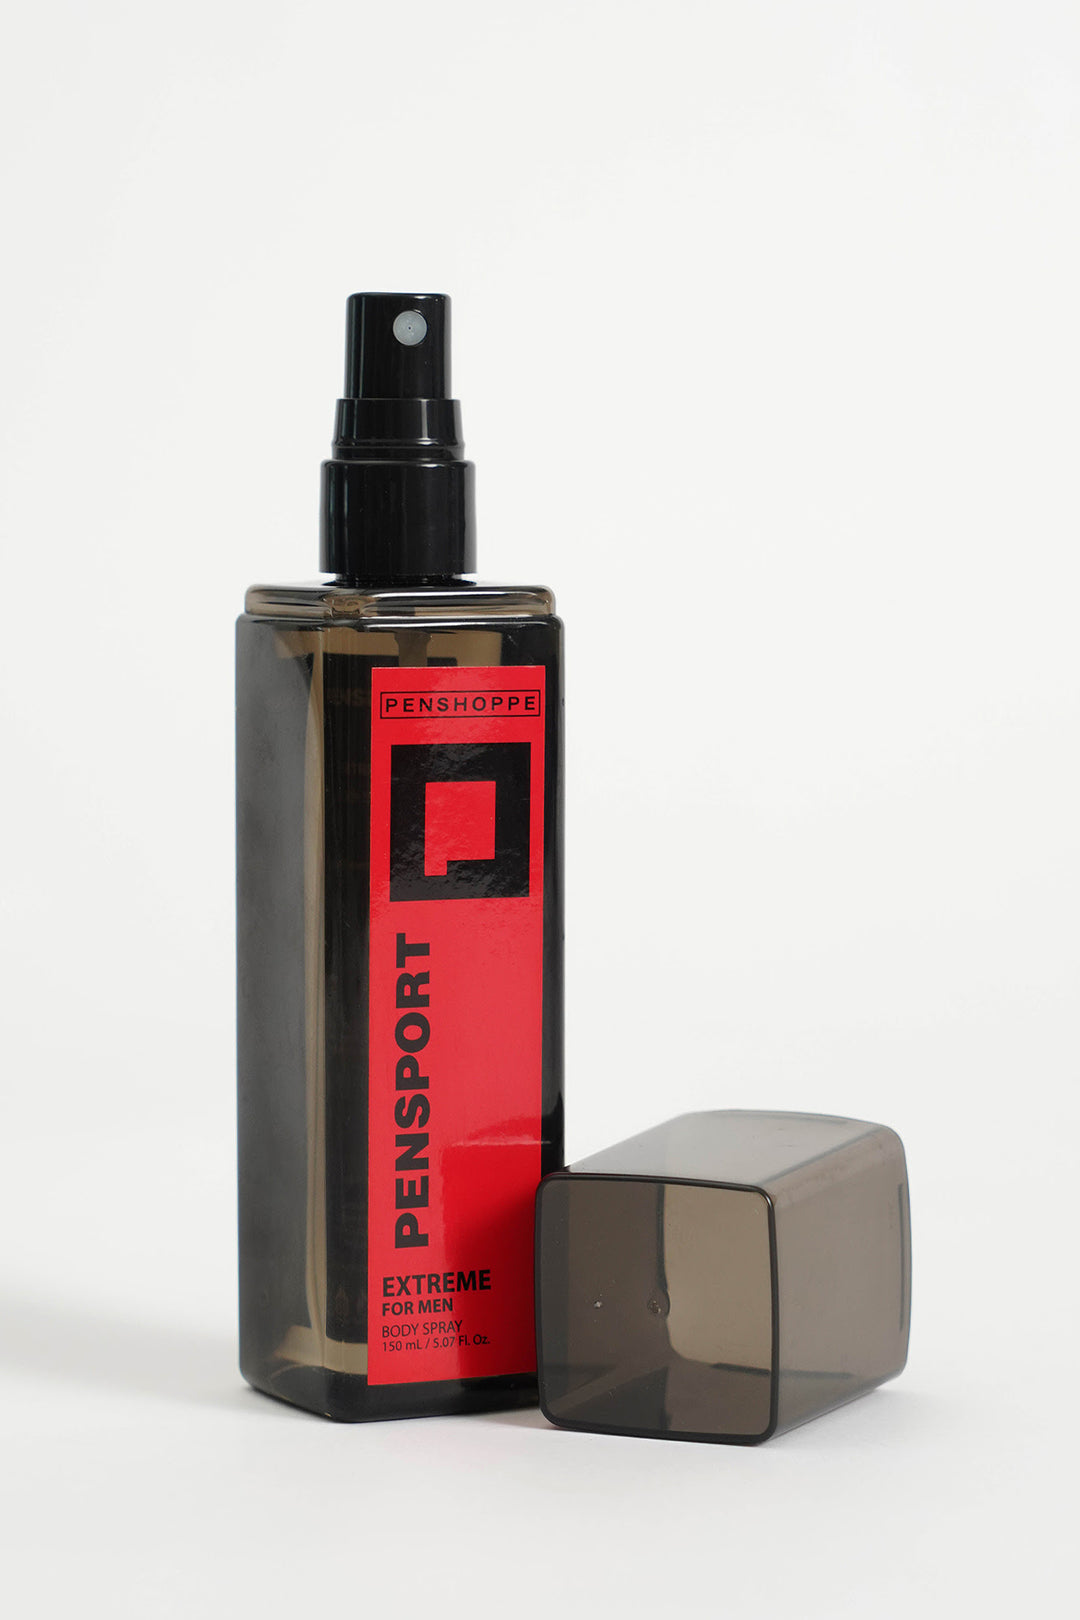 Pensport Extreme Body Spray For Men 150ML - True Beauty Skin Essentials